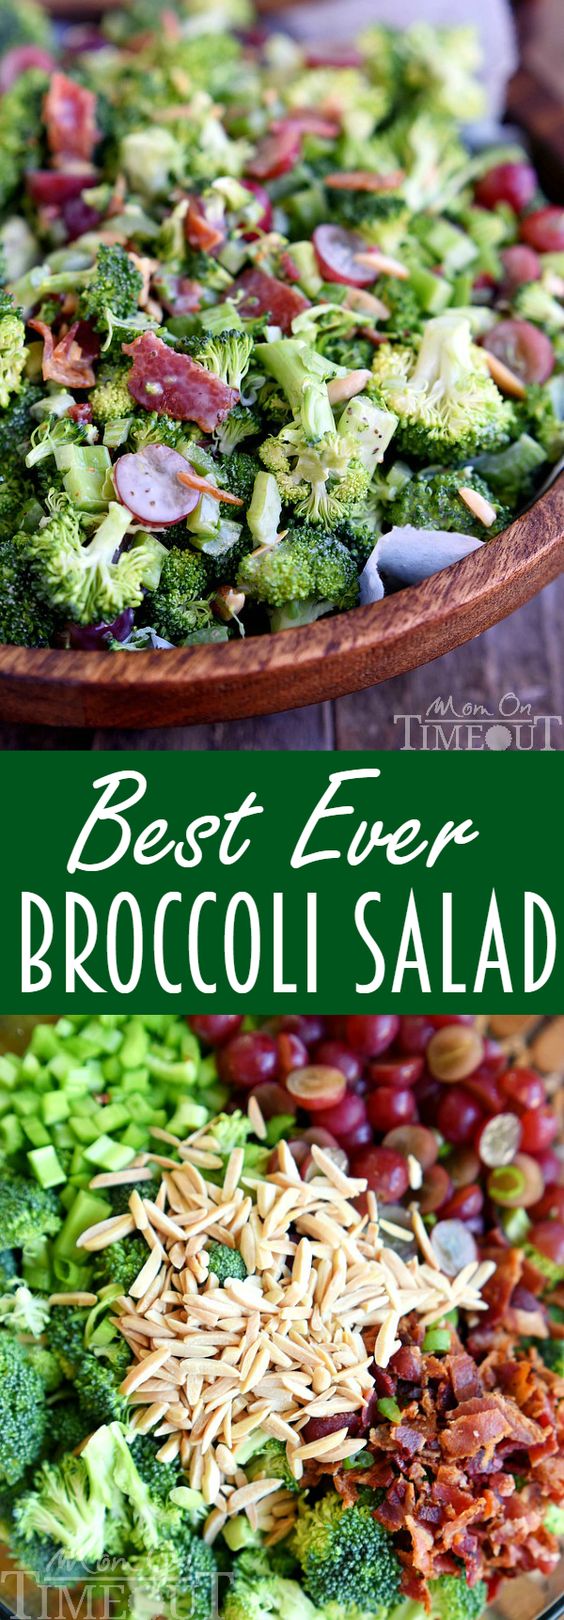 Most Pinned Salad Recipe on Pinterest 11